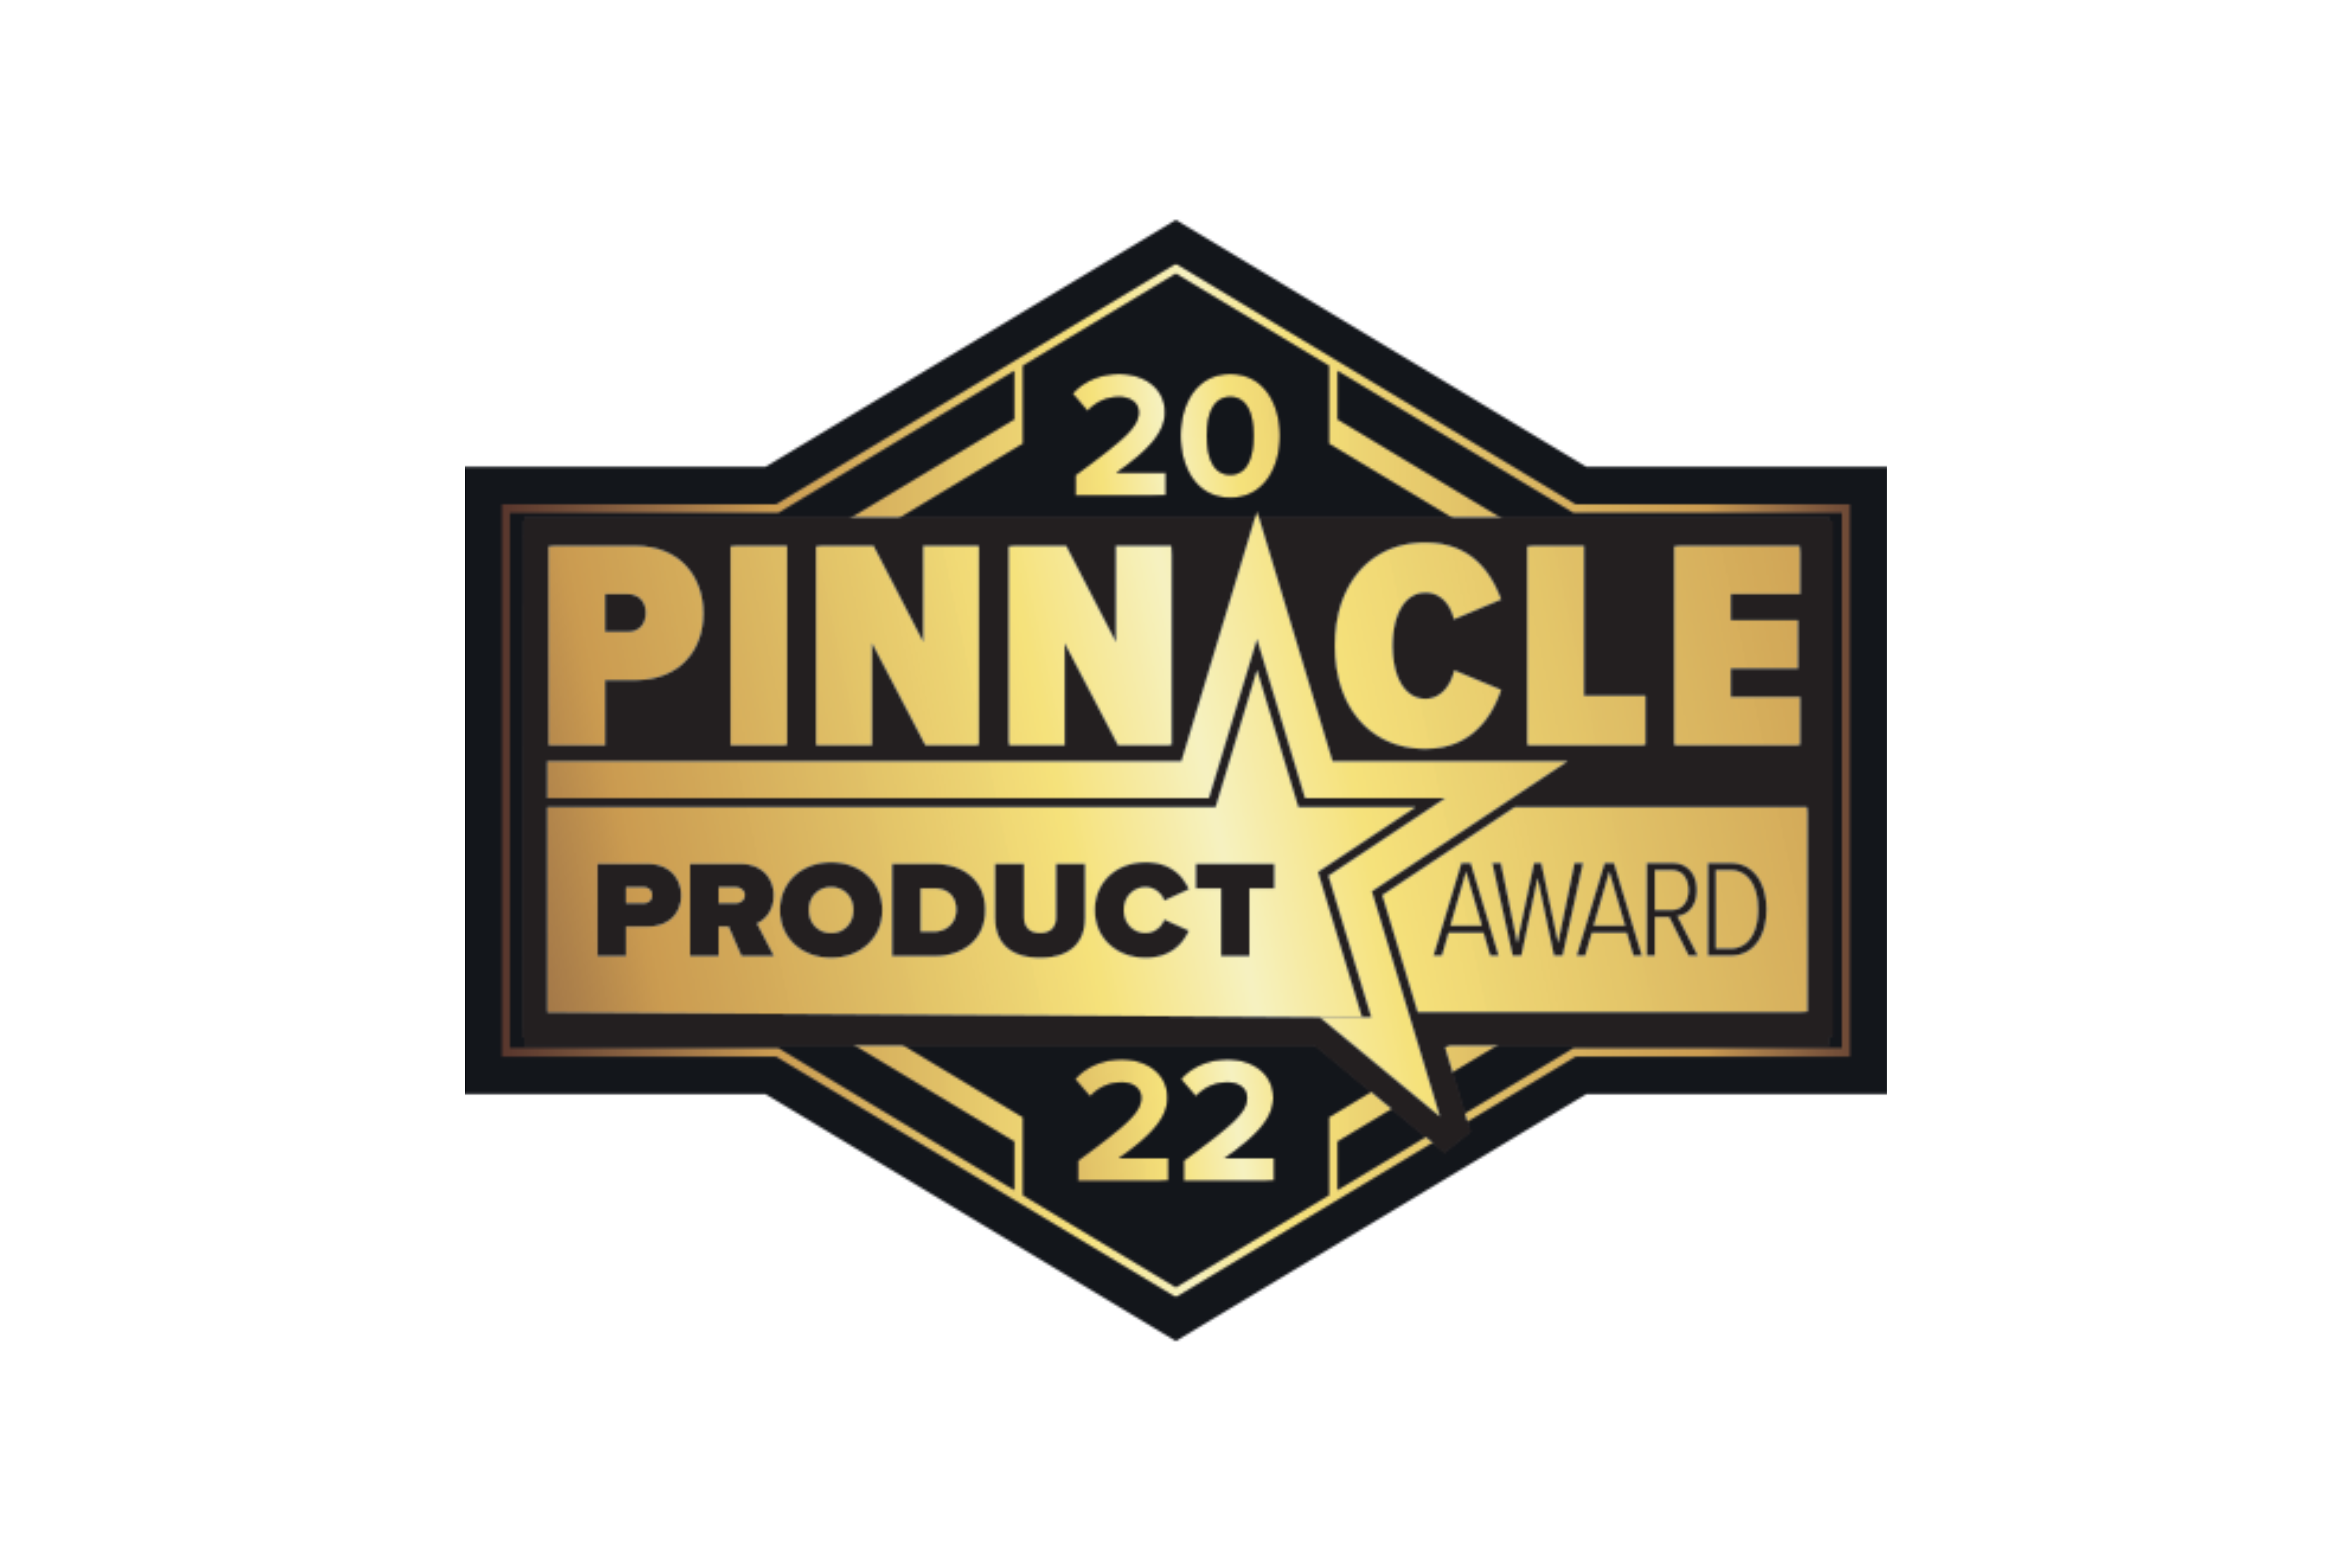 DPC-600 Digital Die Cutter Wins PRINTING United Alliance 2022 Pinnacle Award